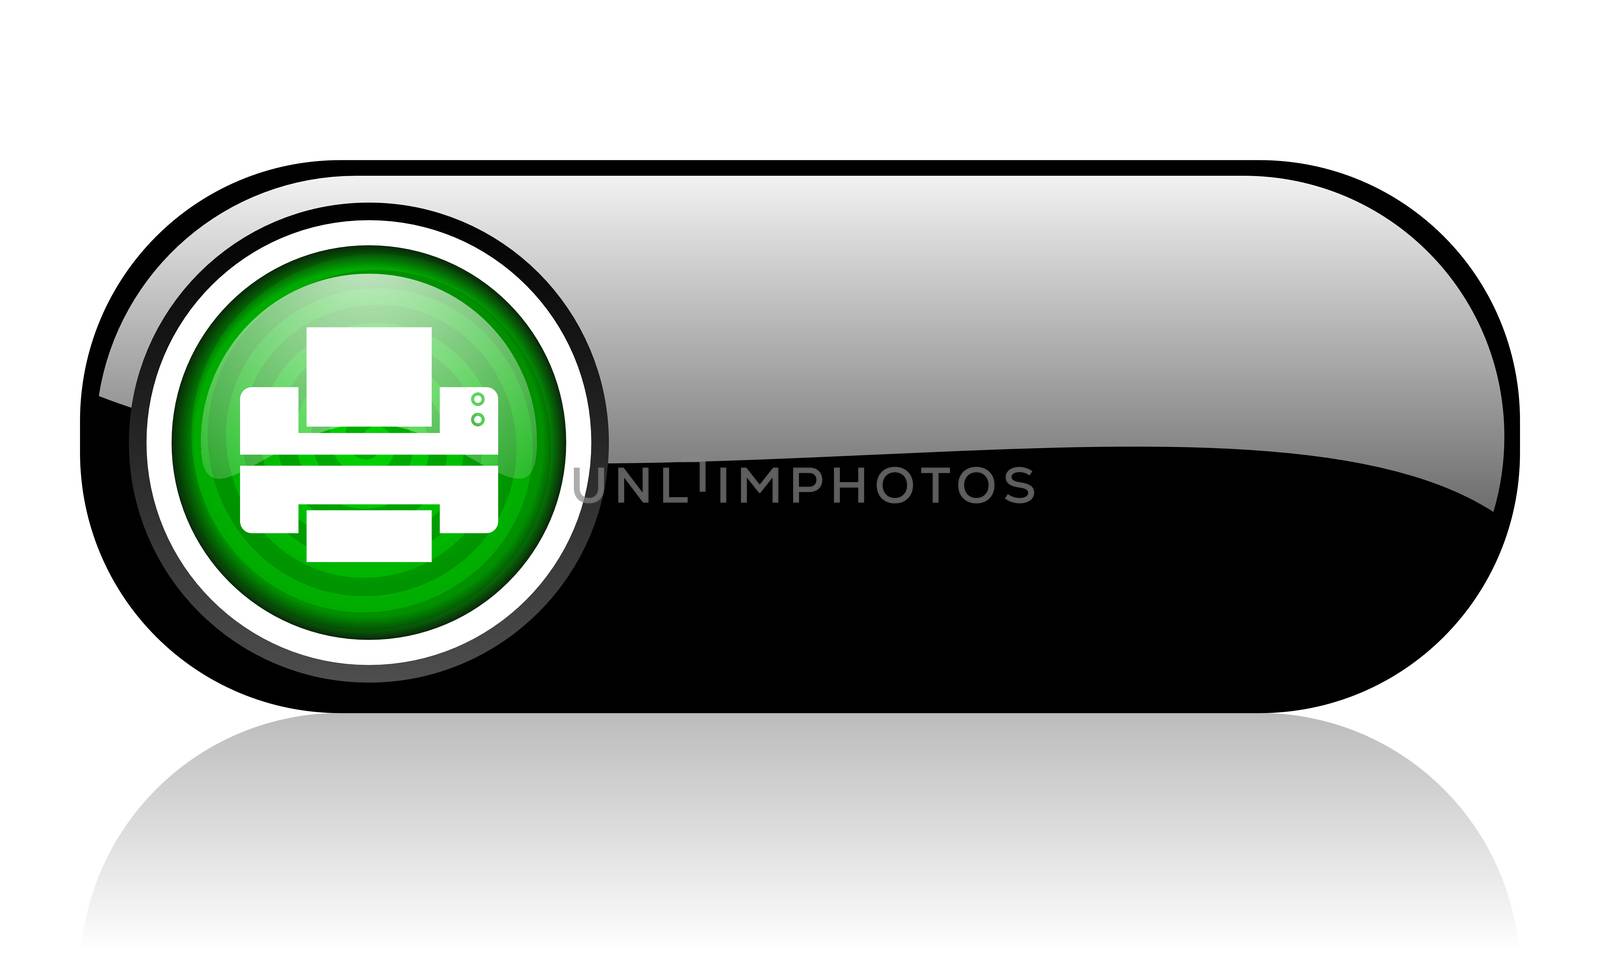 printer black and green web icon on white background by alexwhite